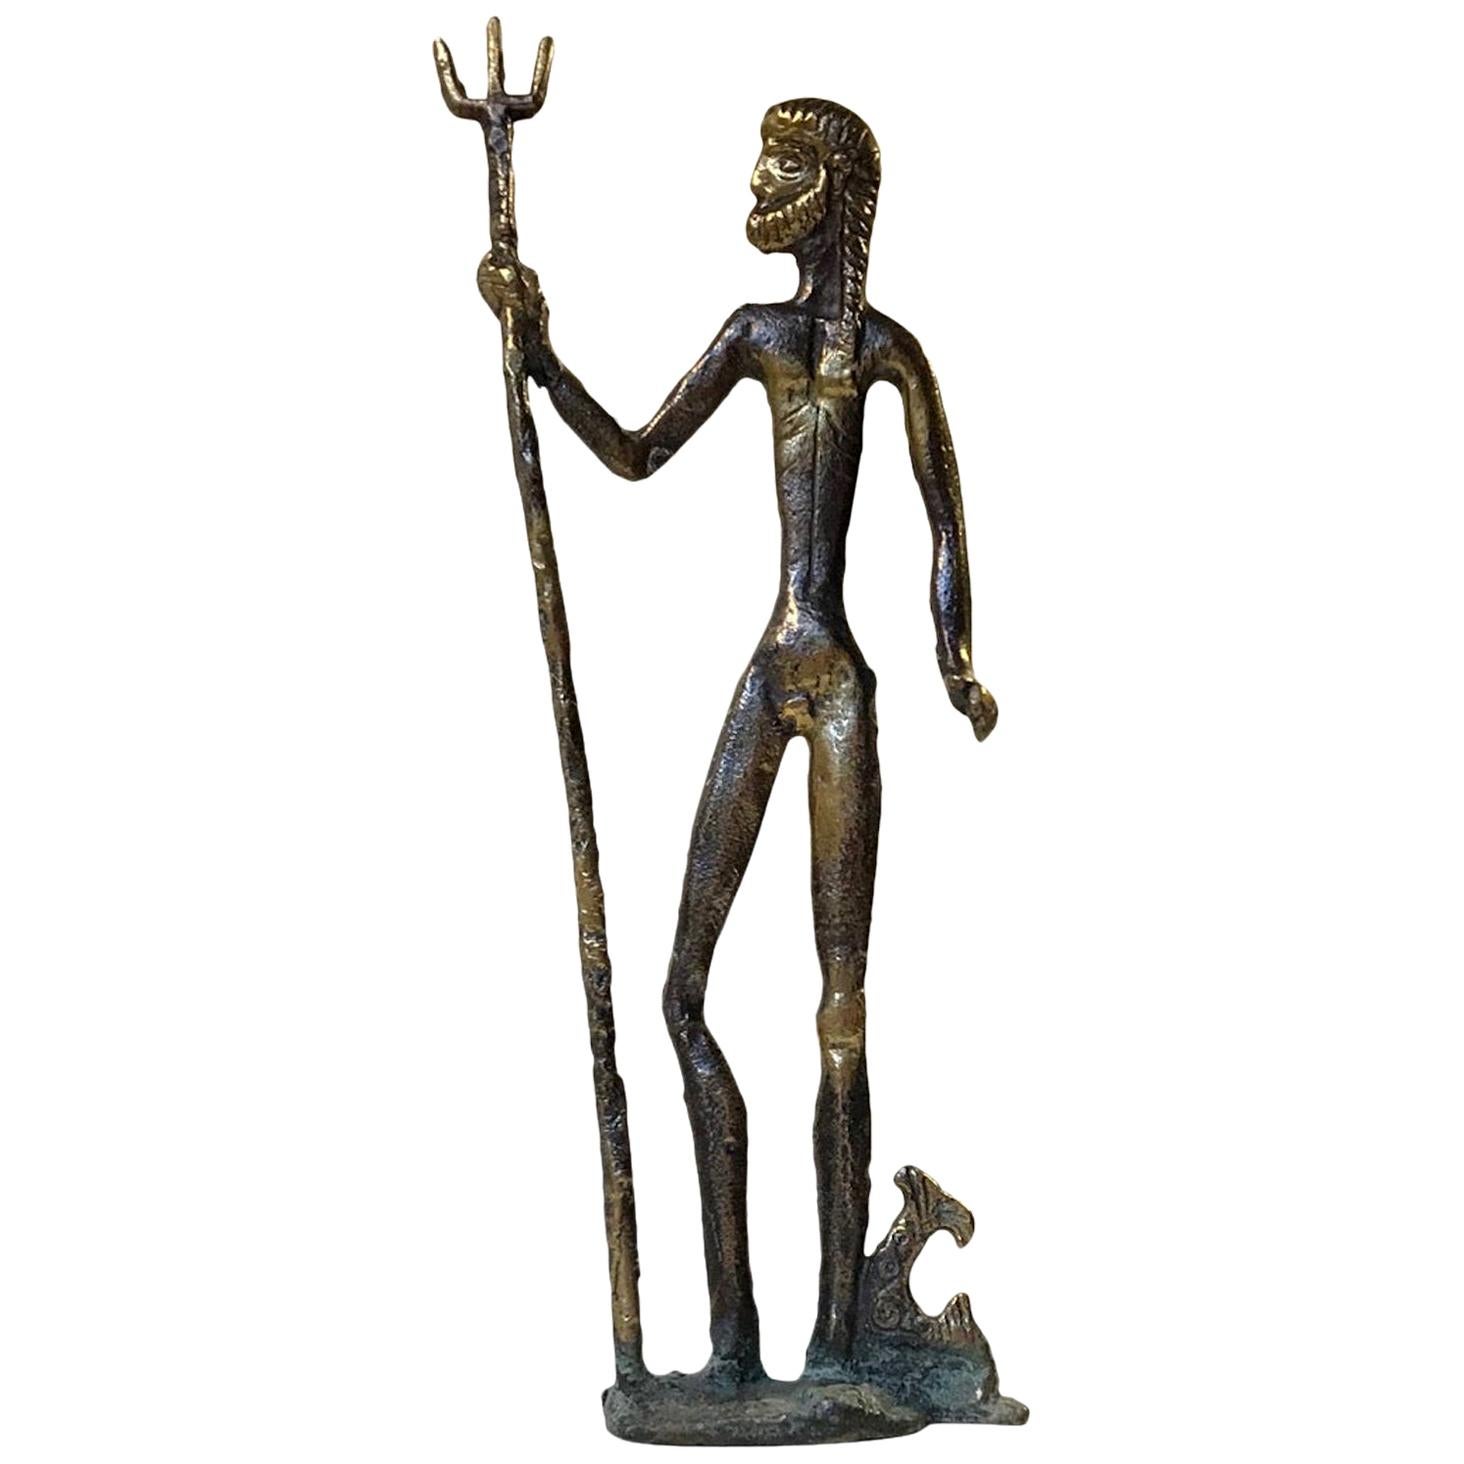 Vintage Naiv Bronze Sculpture of Poseidon, Mythological Sea God